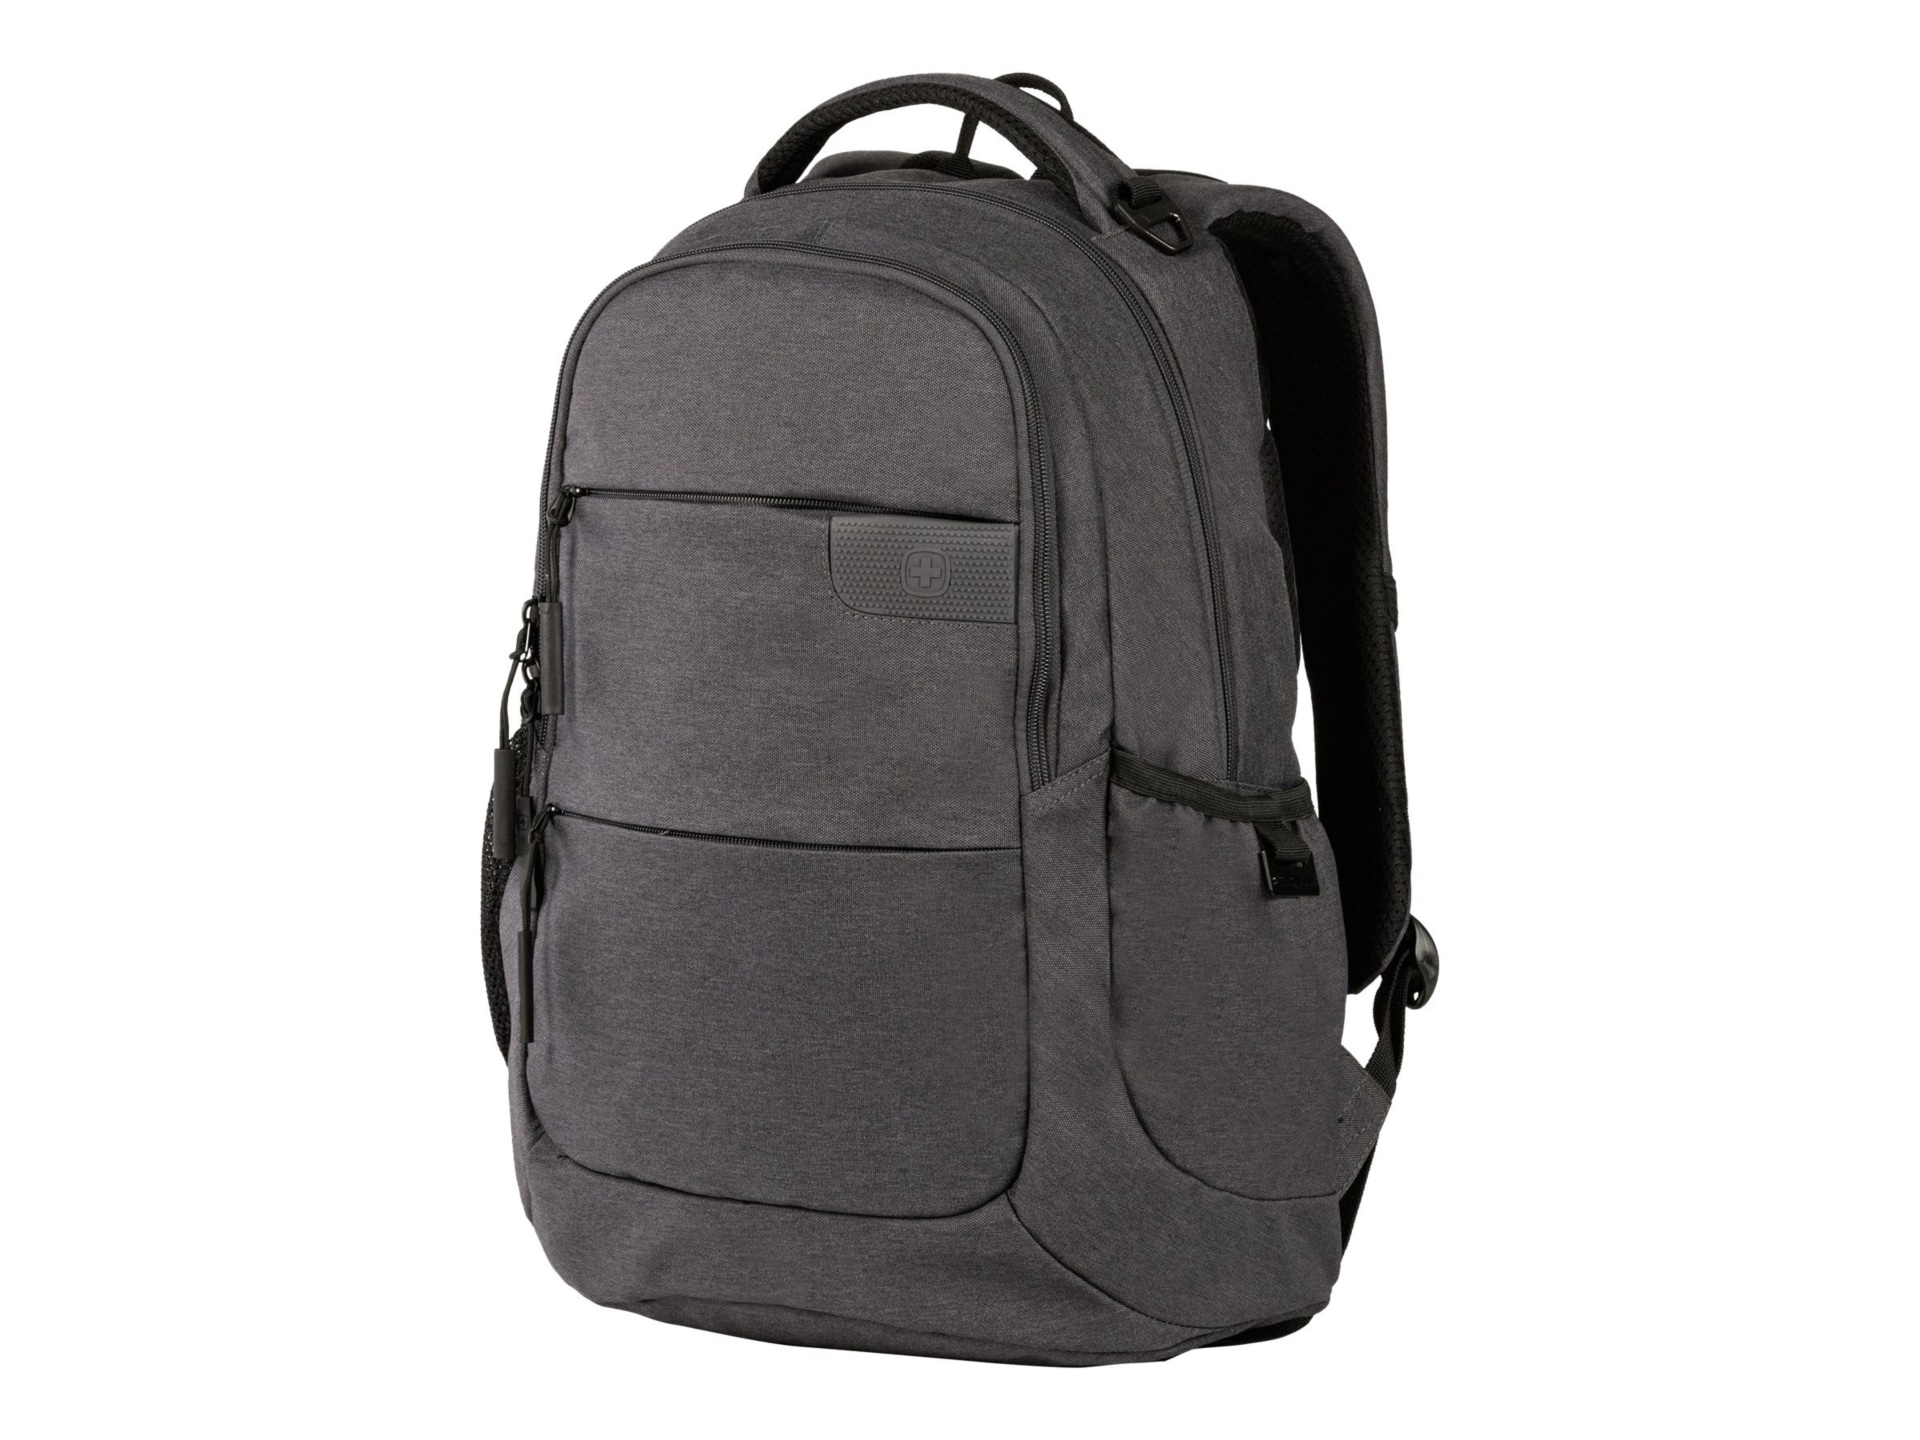 SwissGear 2731 - notebook carrying backpack